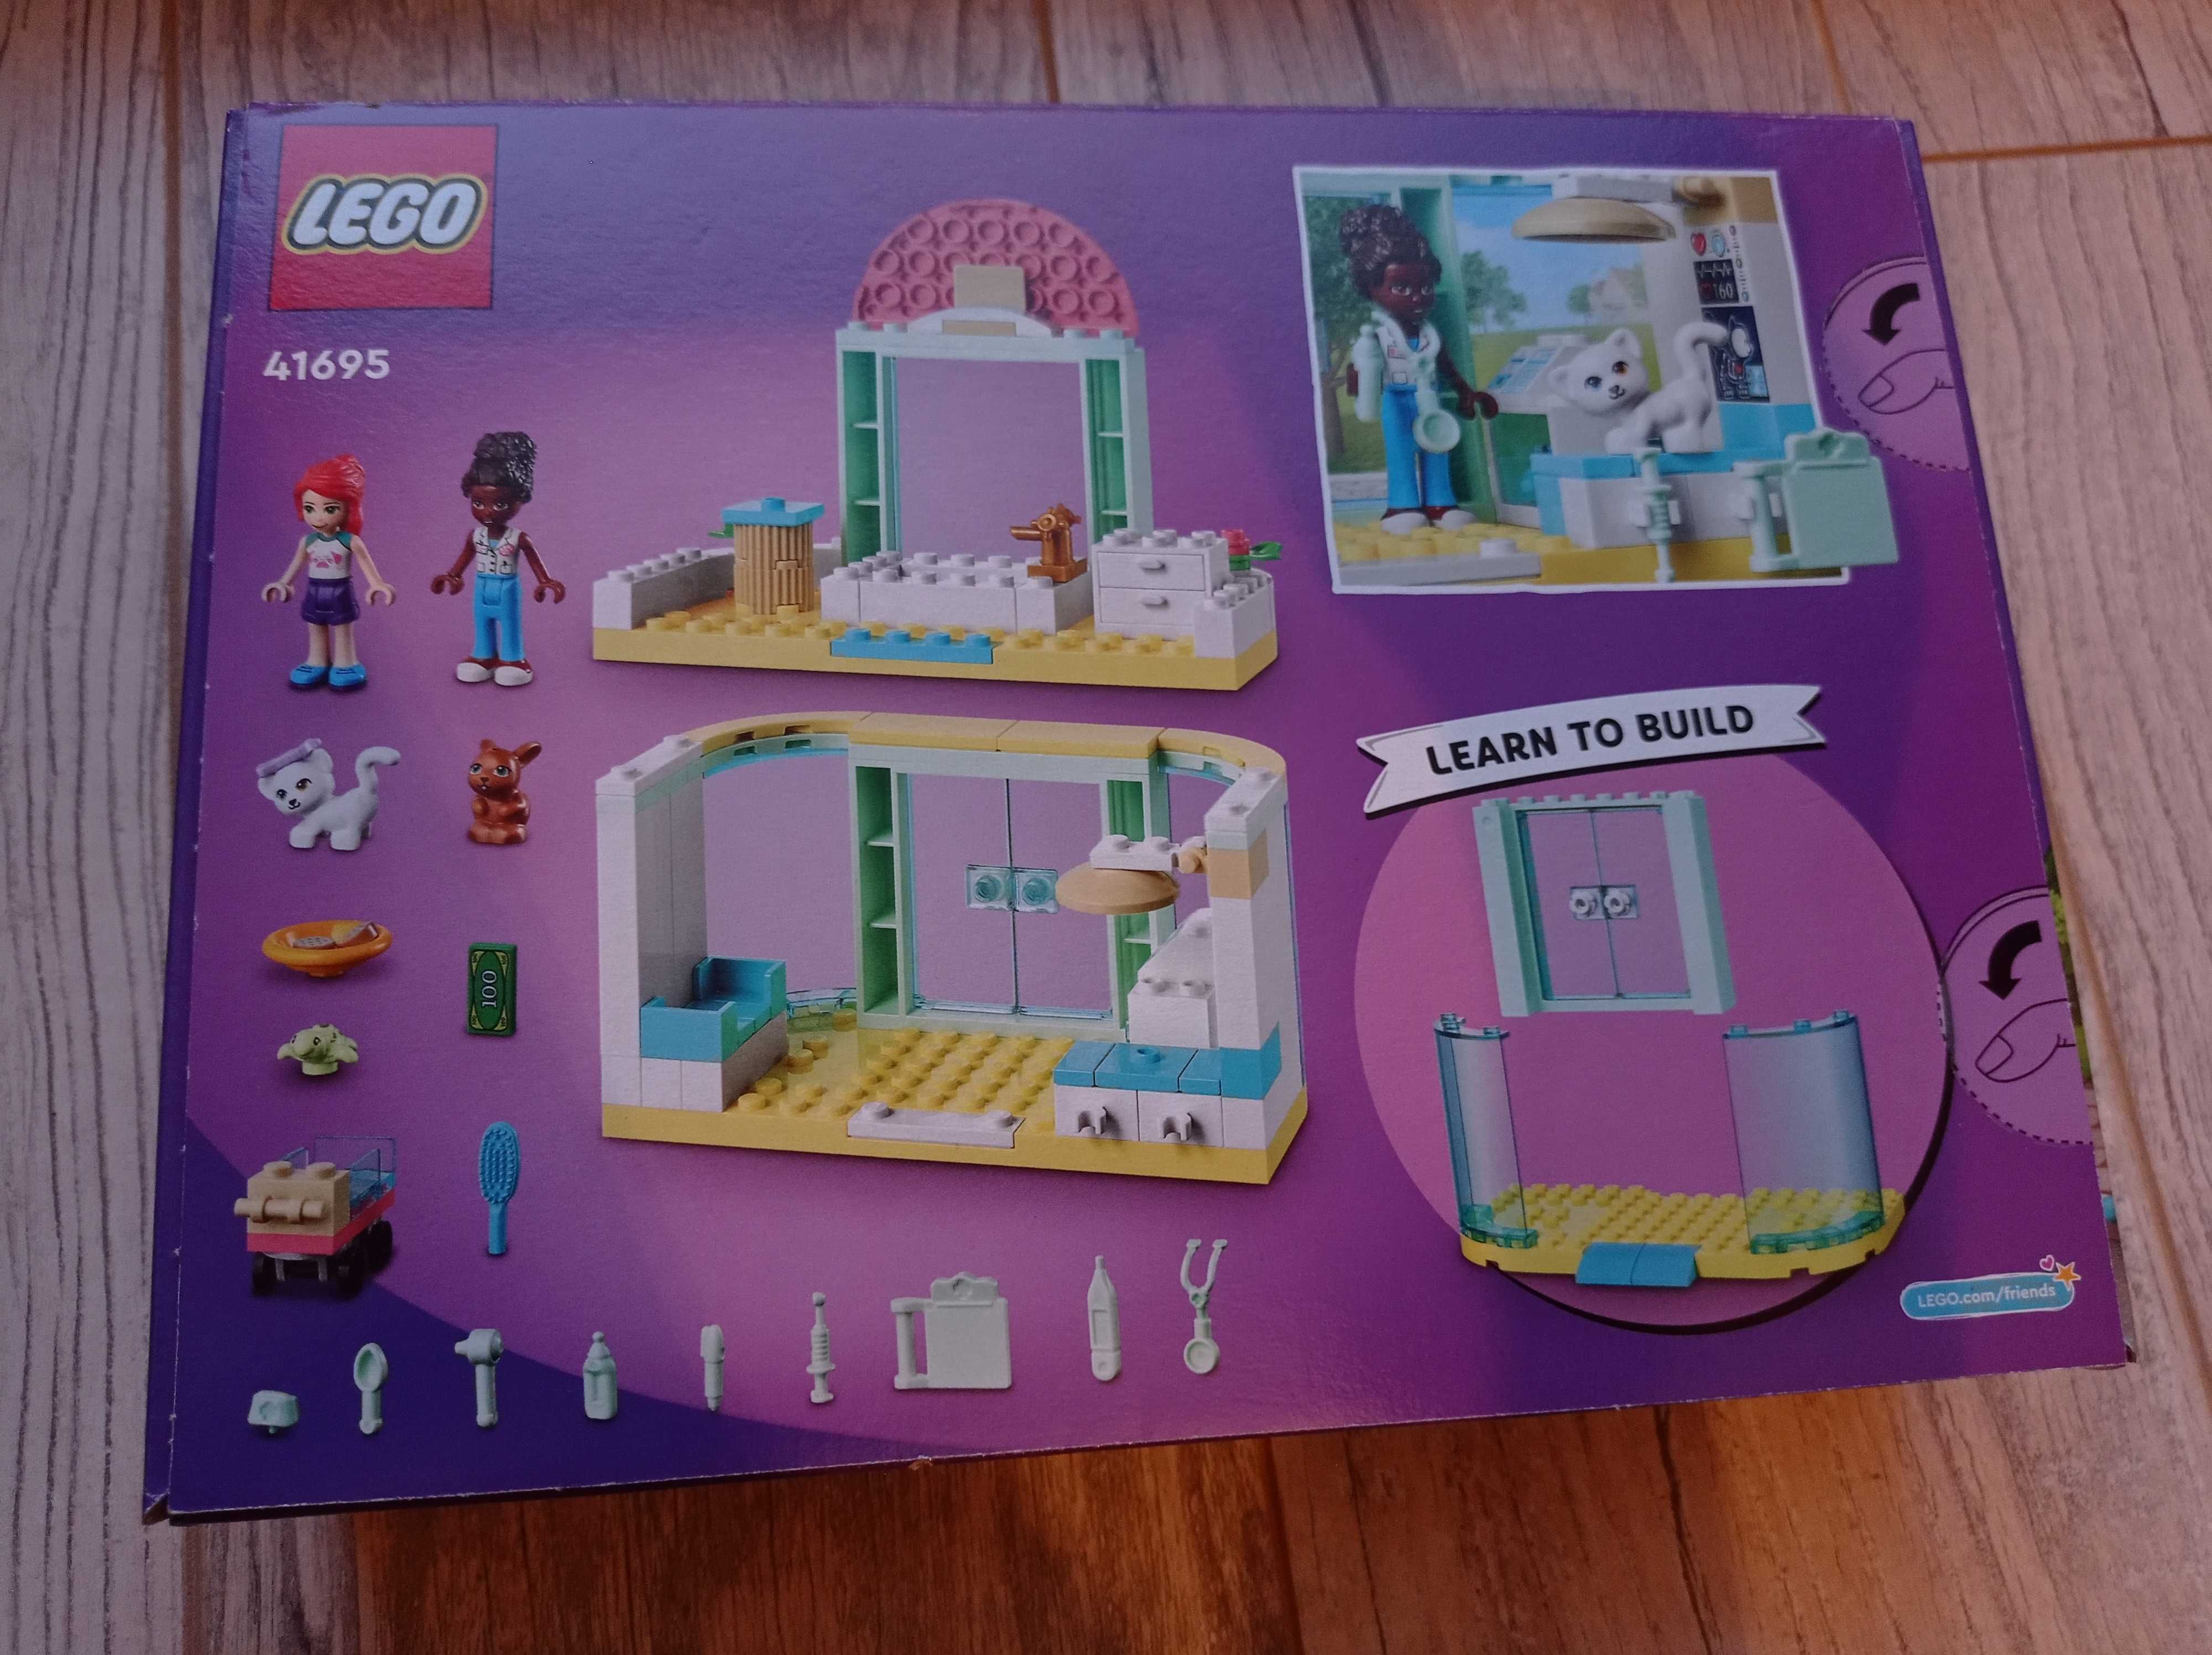 Lego Friends 41695